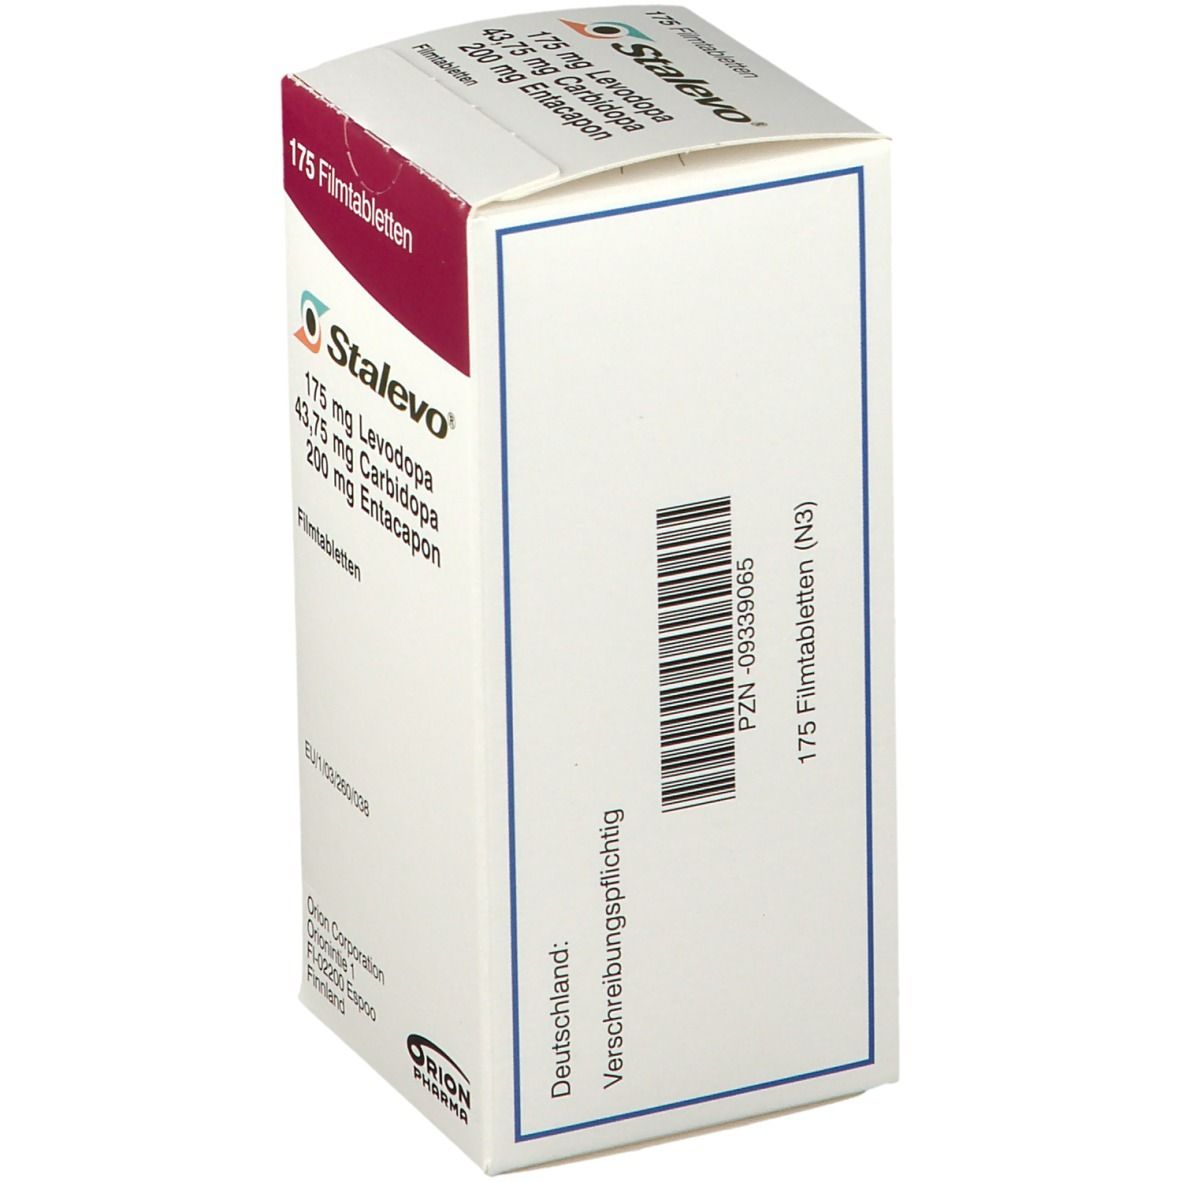 Stalevo® 175 mg/43,75 mg/200 mg